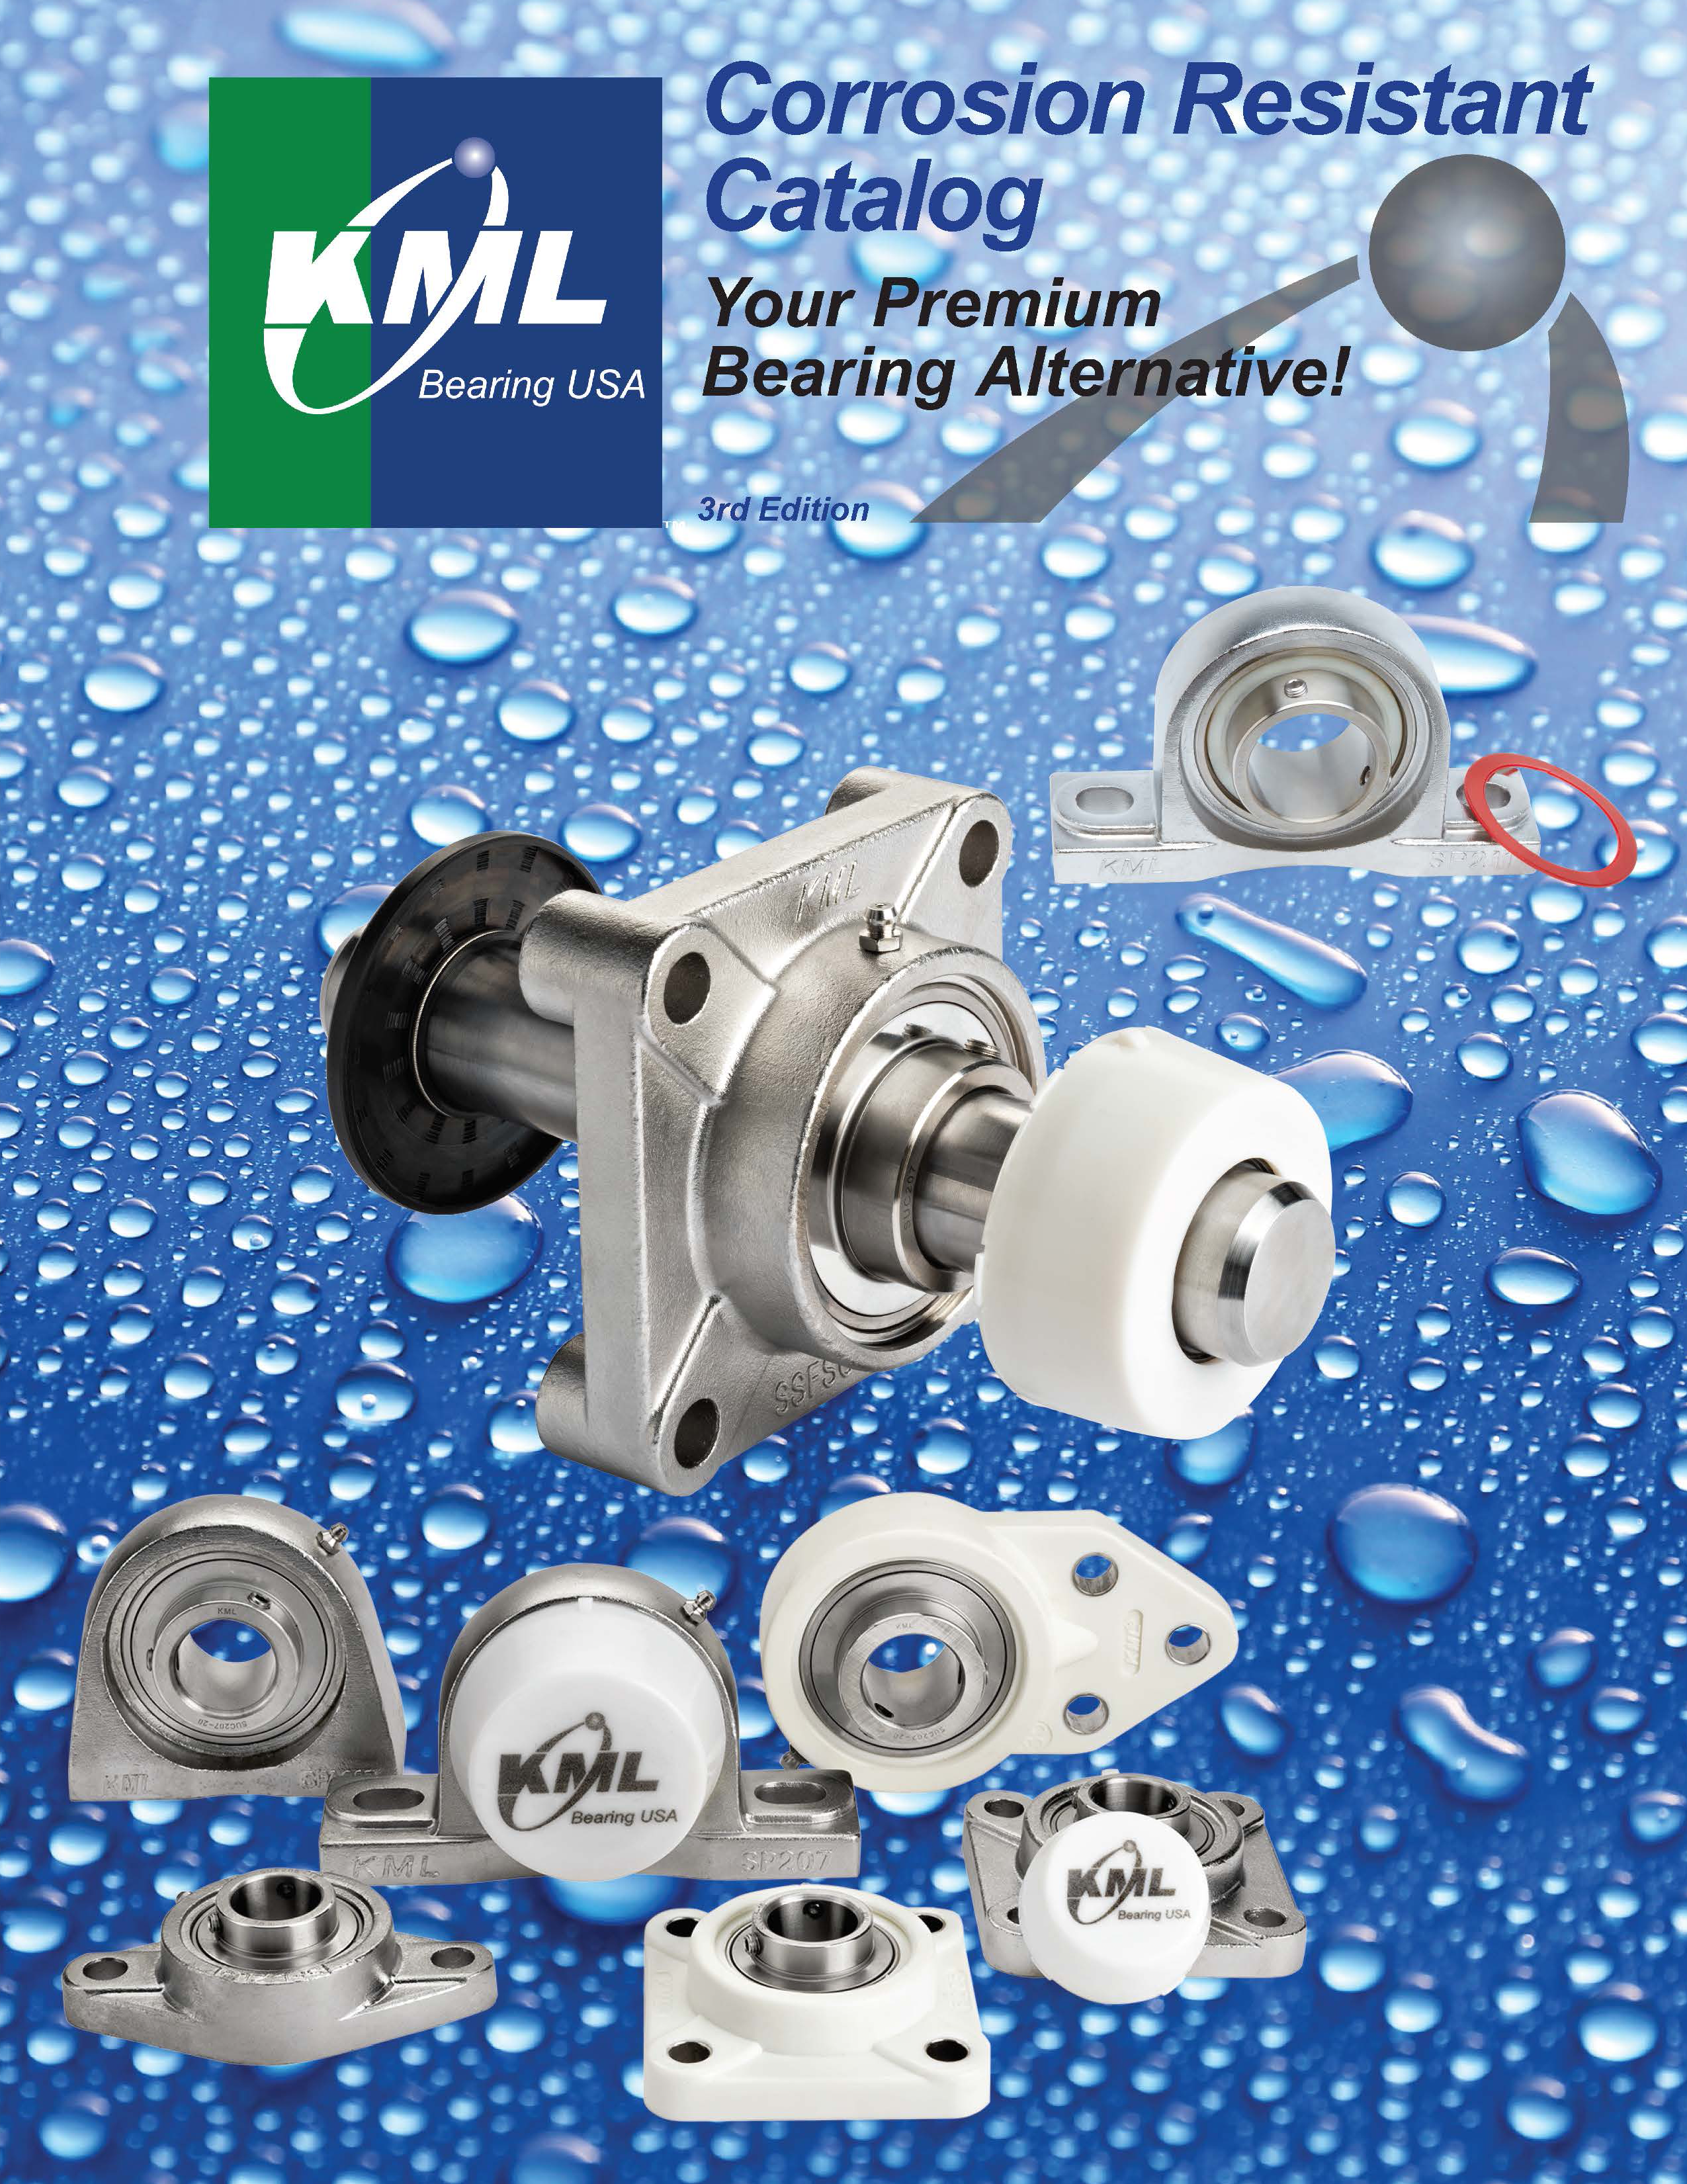 KML Bearing USA Corrosion Resistant 2019 Catalog